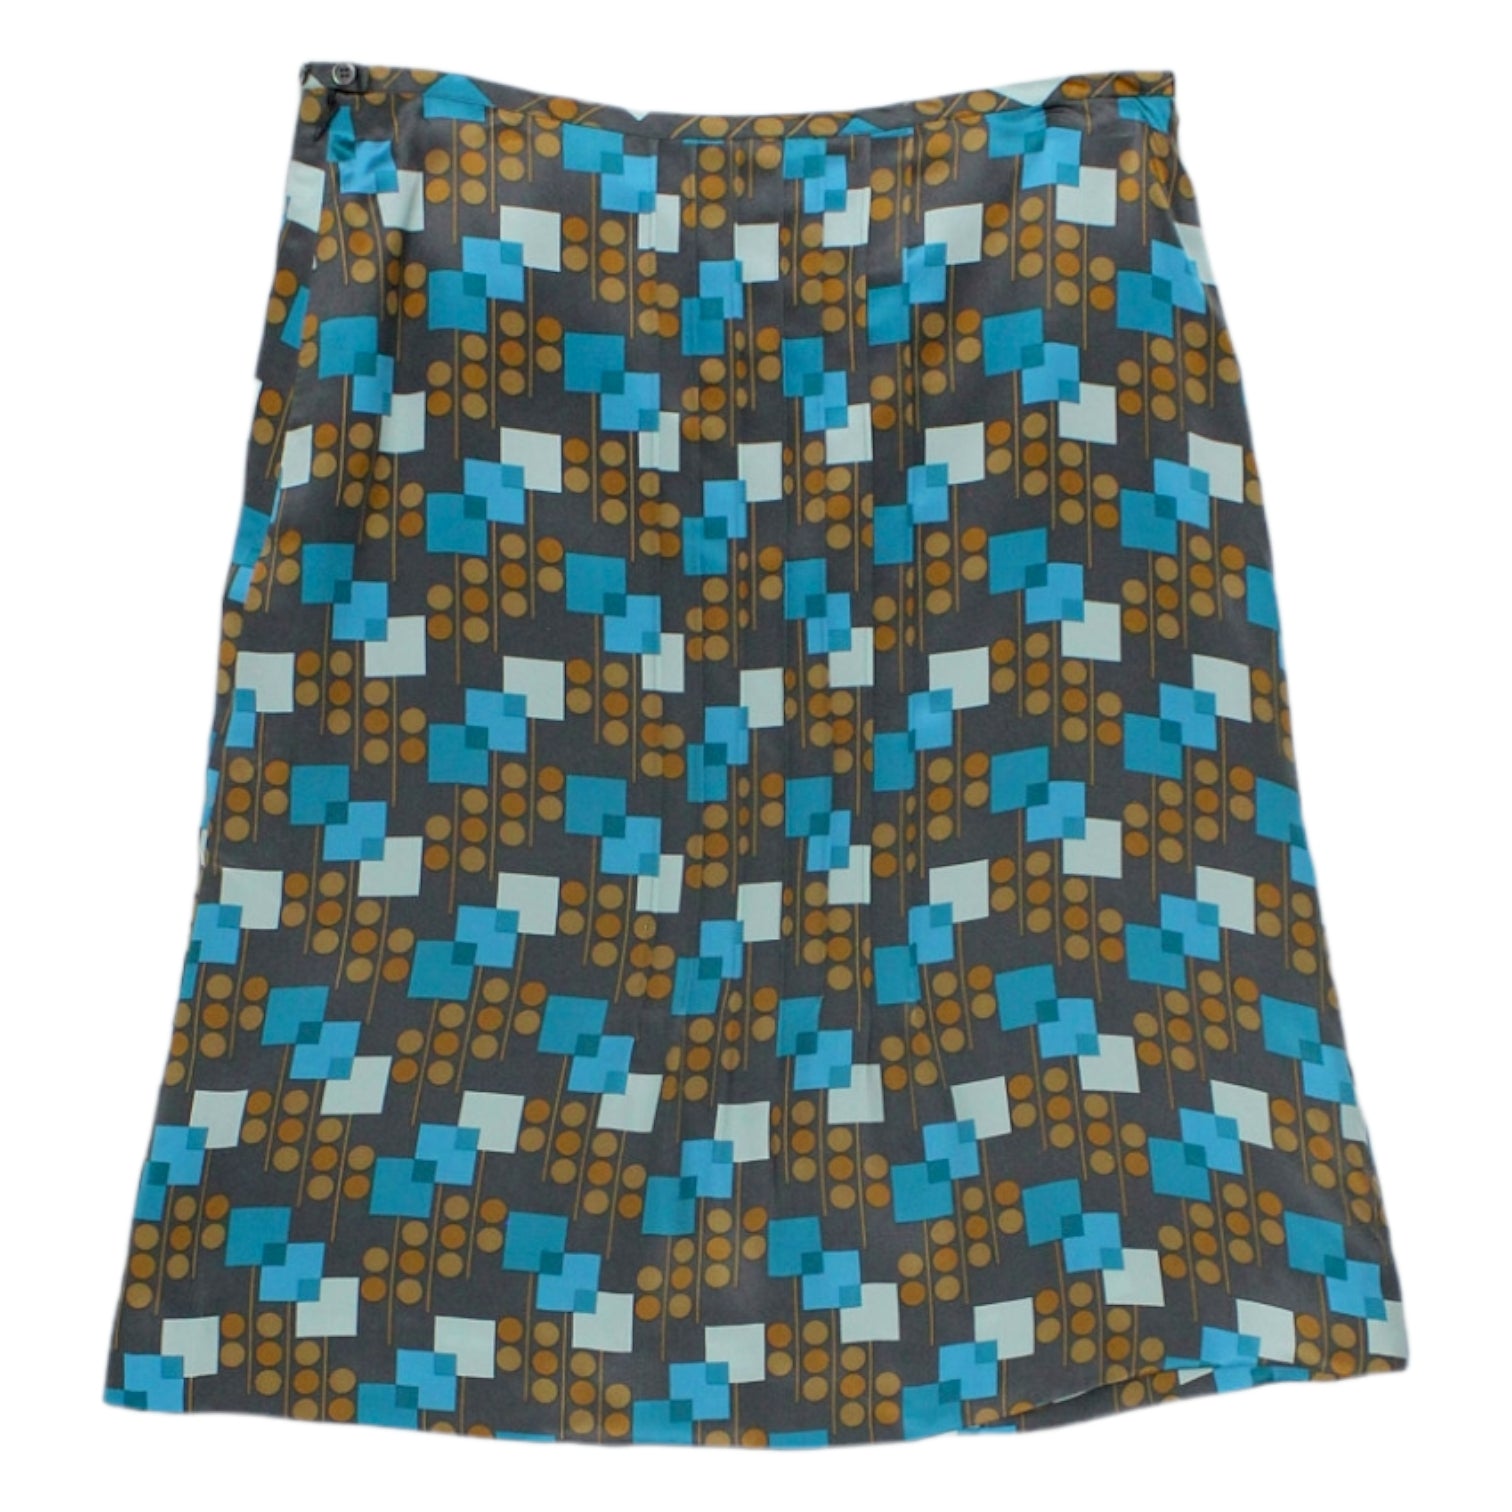 Orla Kiely Blue Square/Dot Silk Skirt